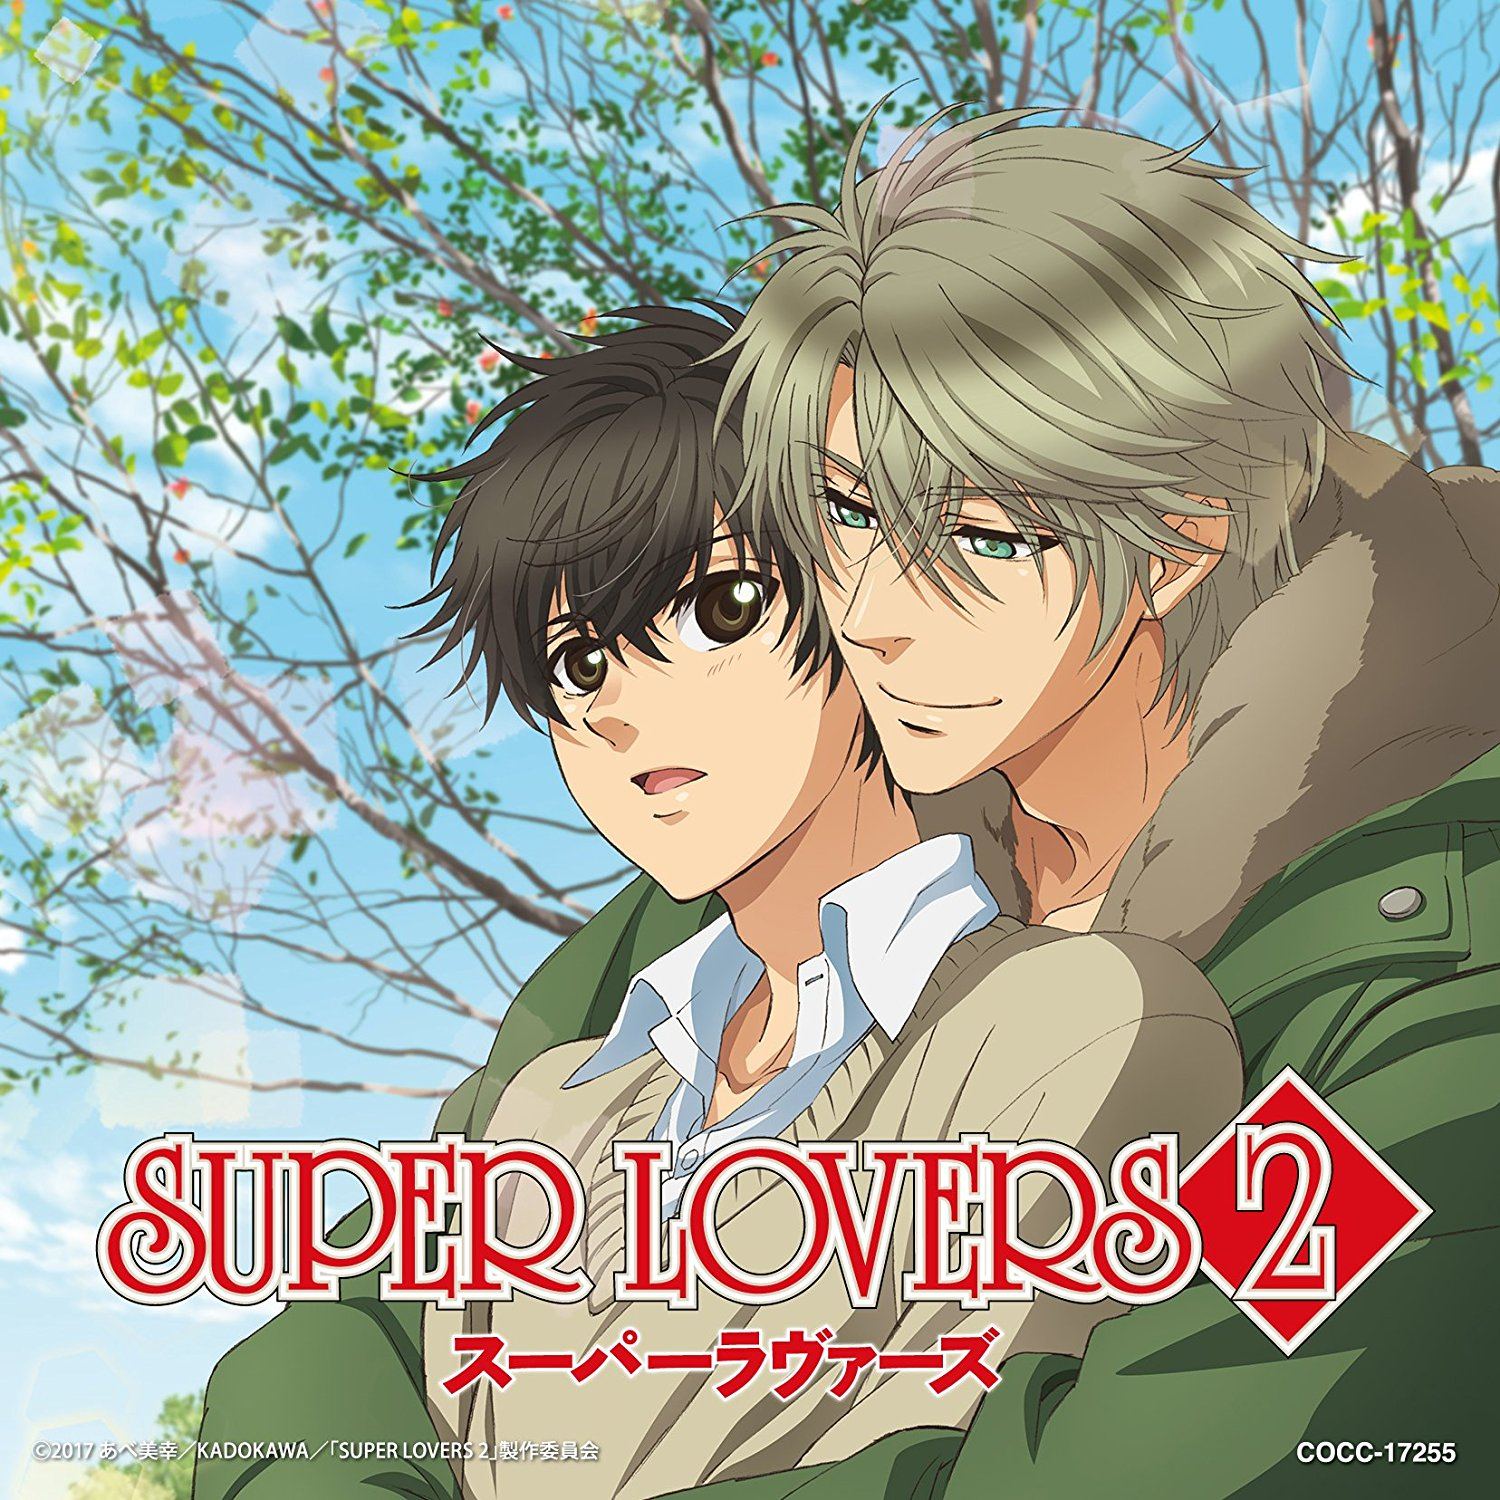 Hare Iro Melody - Super Lovers 2 Ver. (Super Lovers 2 Intro Theme)